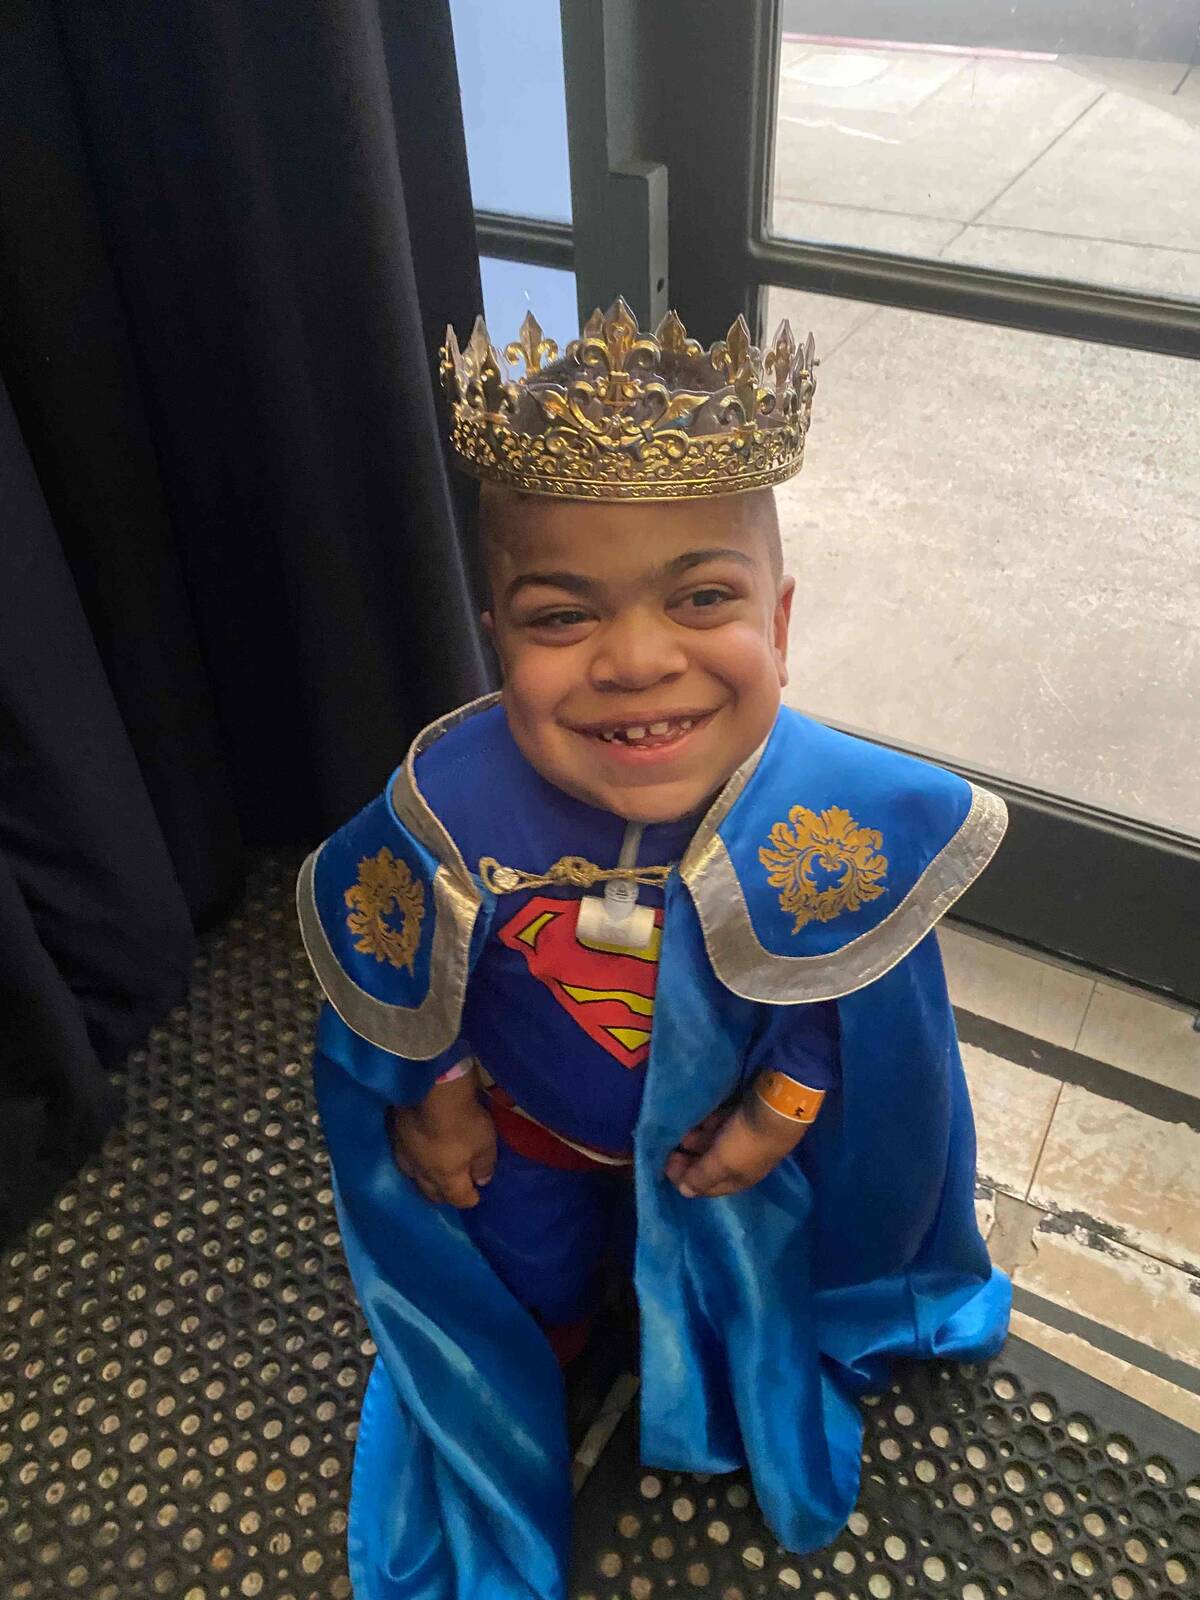 Make-A-Wish Australia wish kid Khoder dressed up as a king